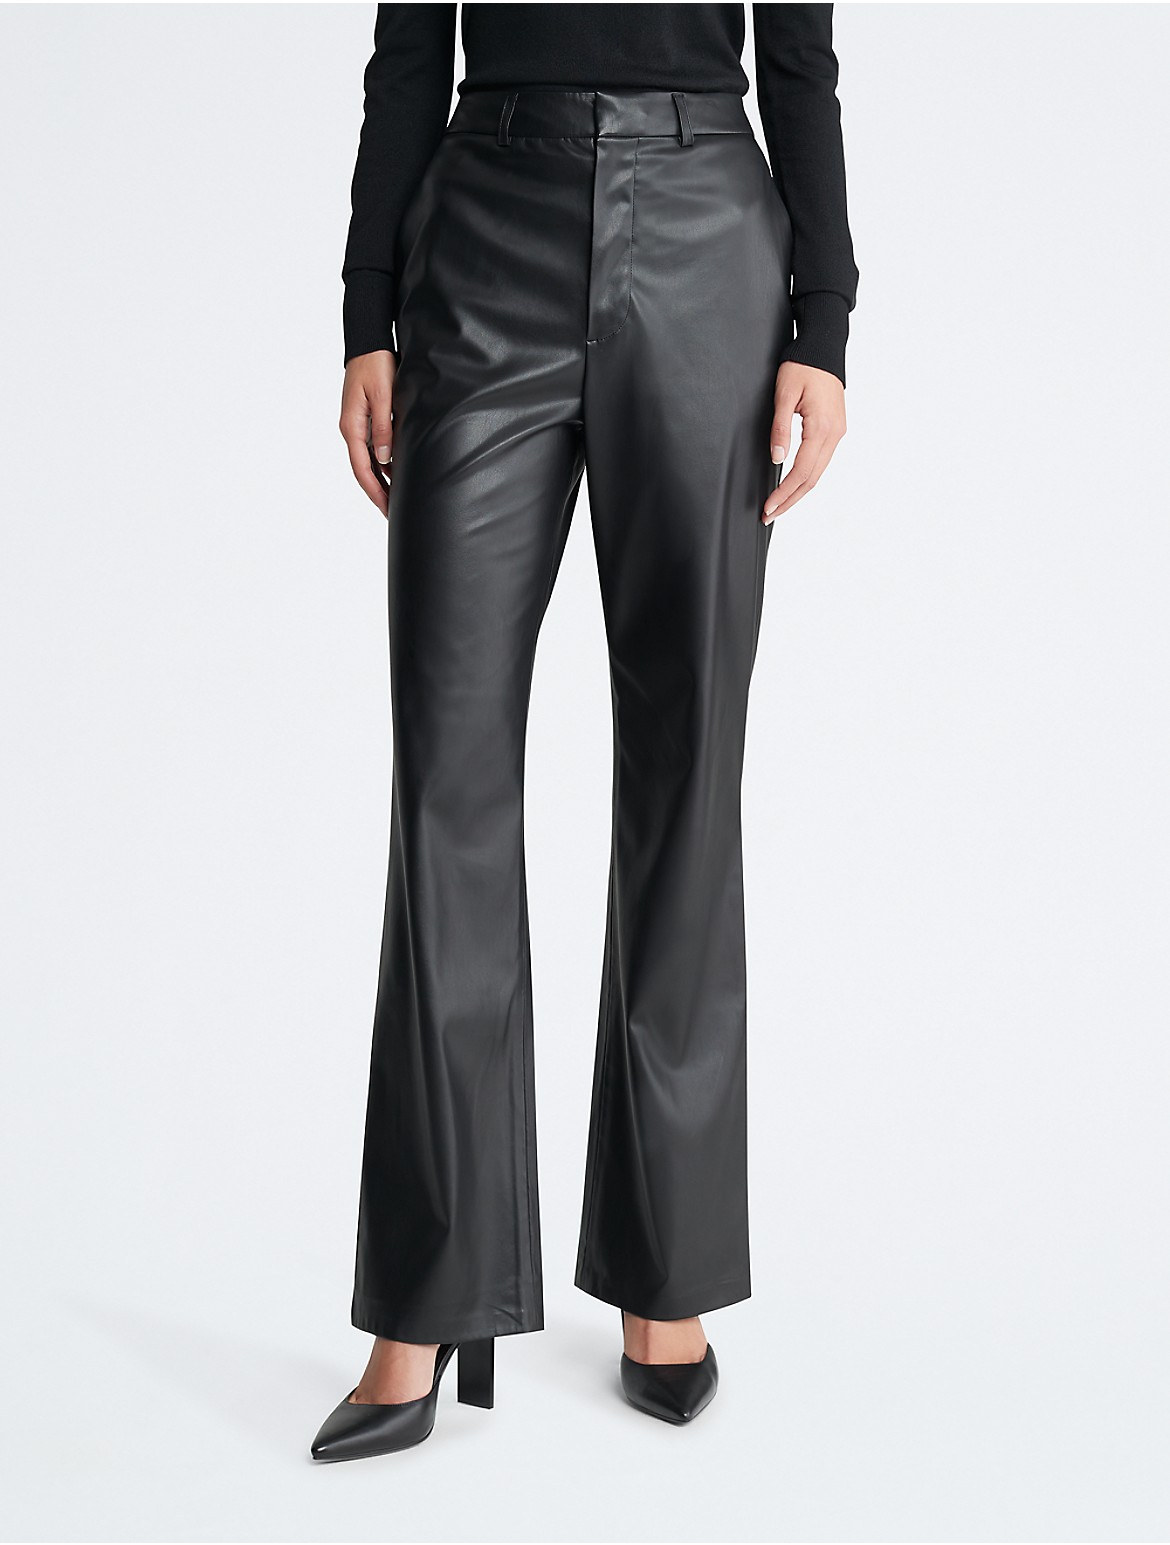 Calvin Klein Women's Faux Leather Flared Pants - Black - 25